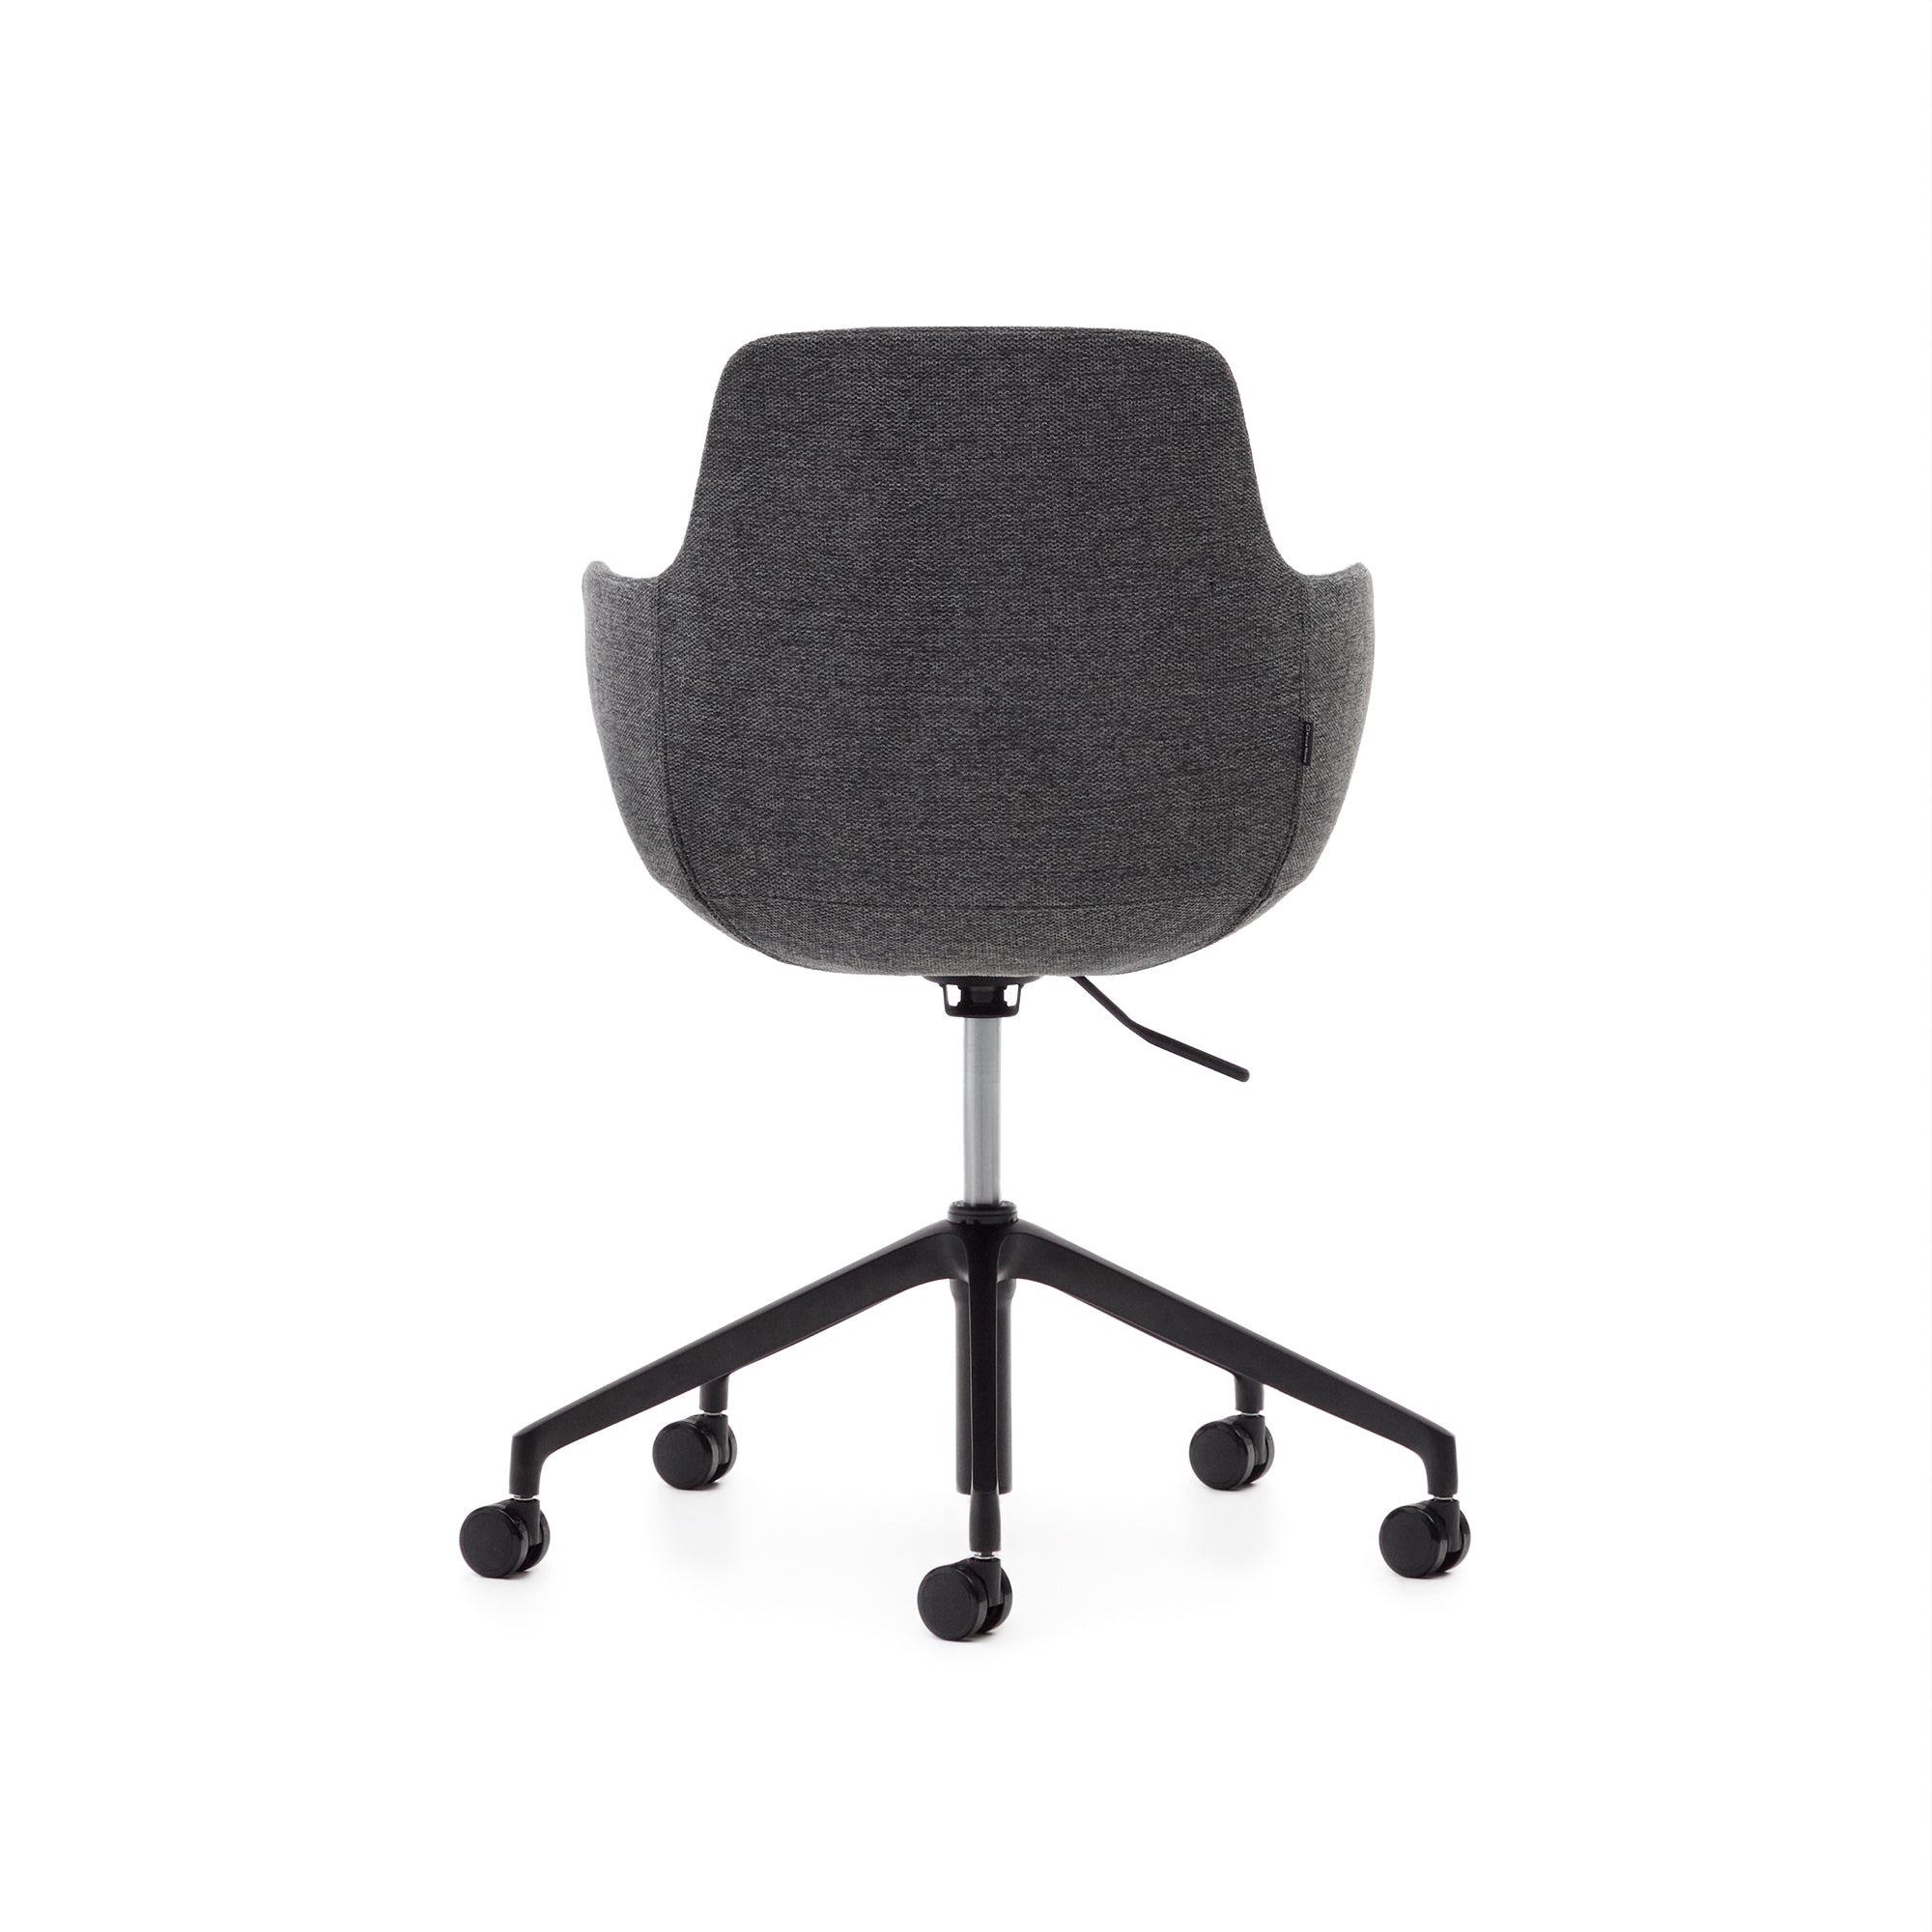 Tissiana dark grey and aluminium desk chair with matt black finish